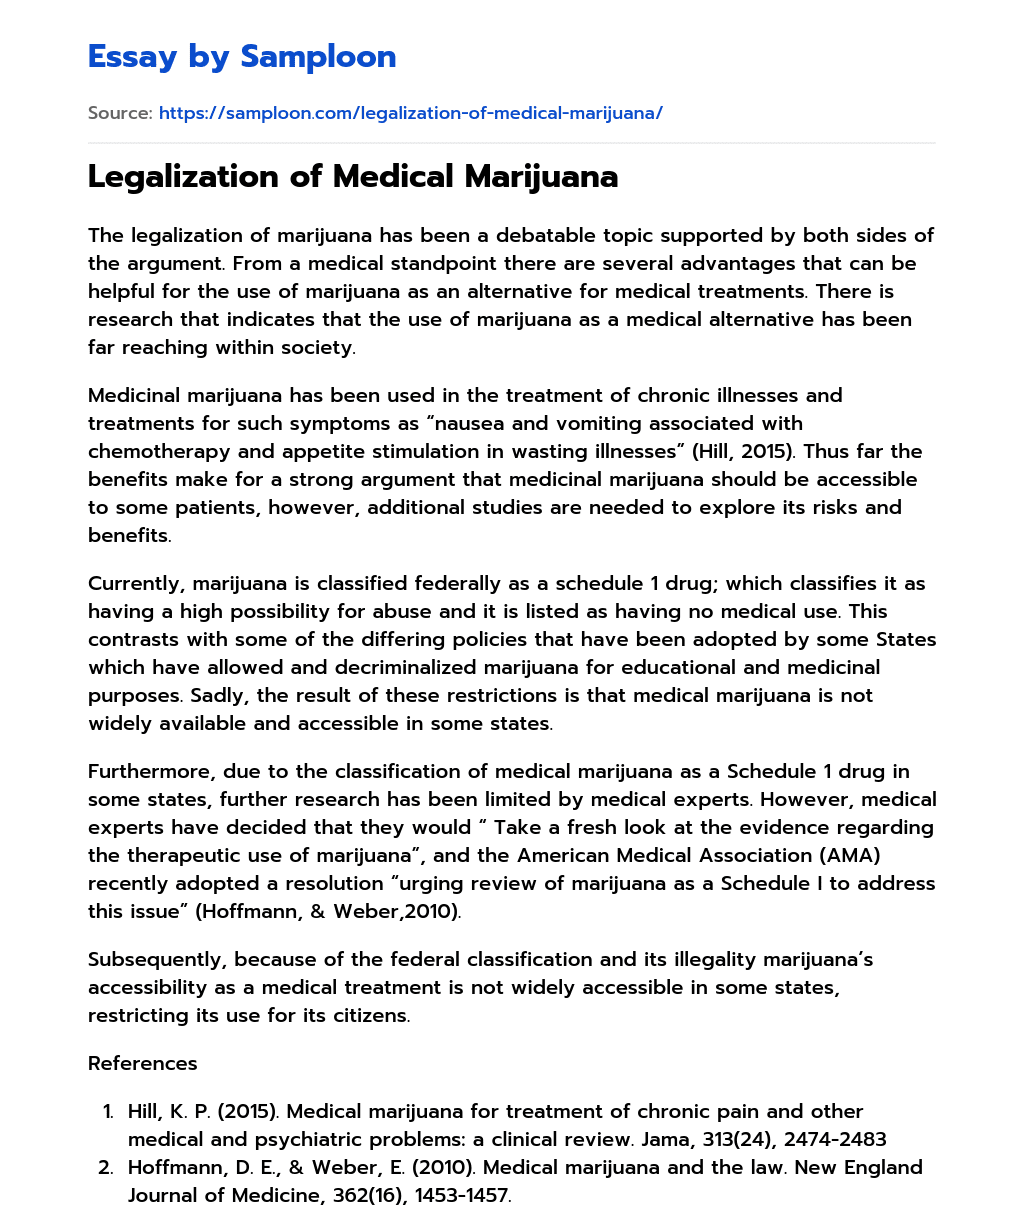 medical marijuana essay conclusion